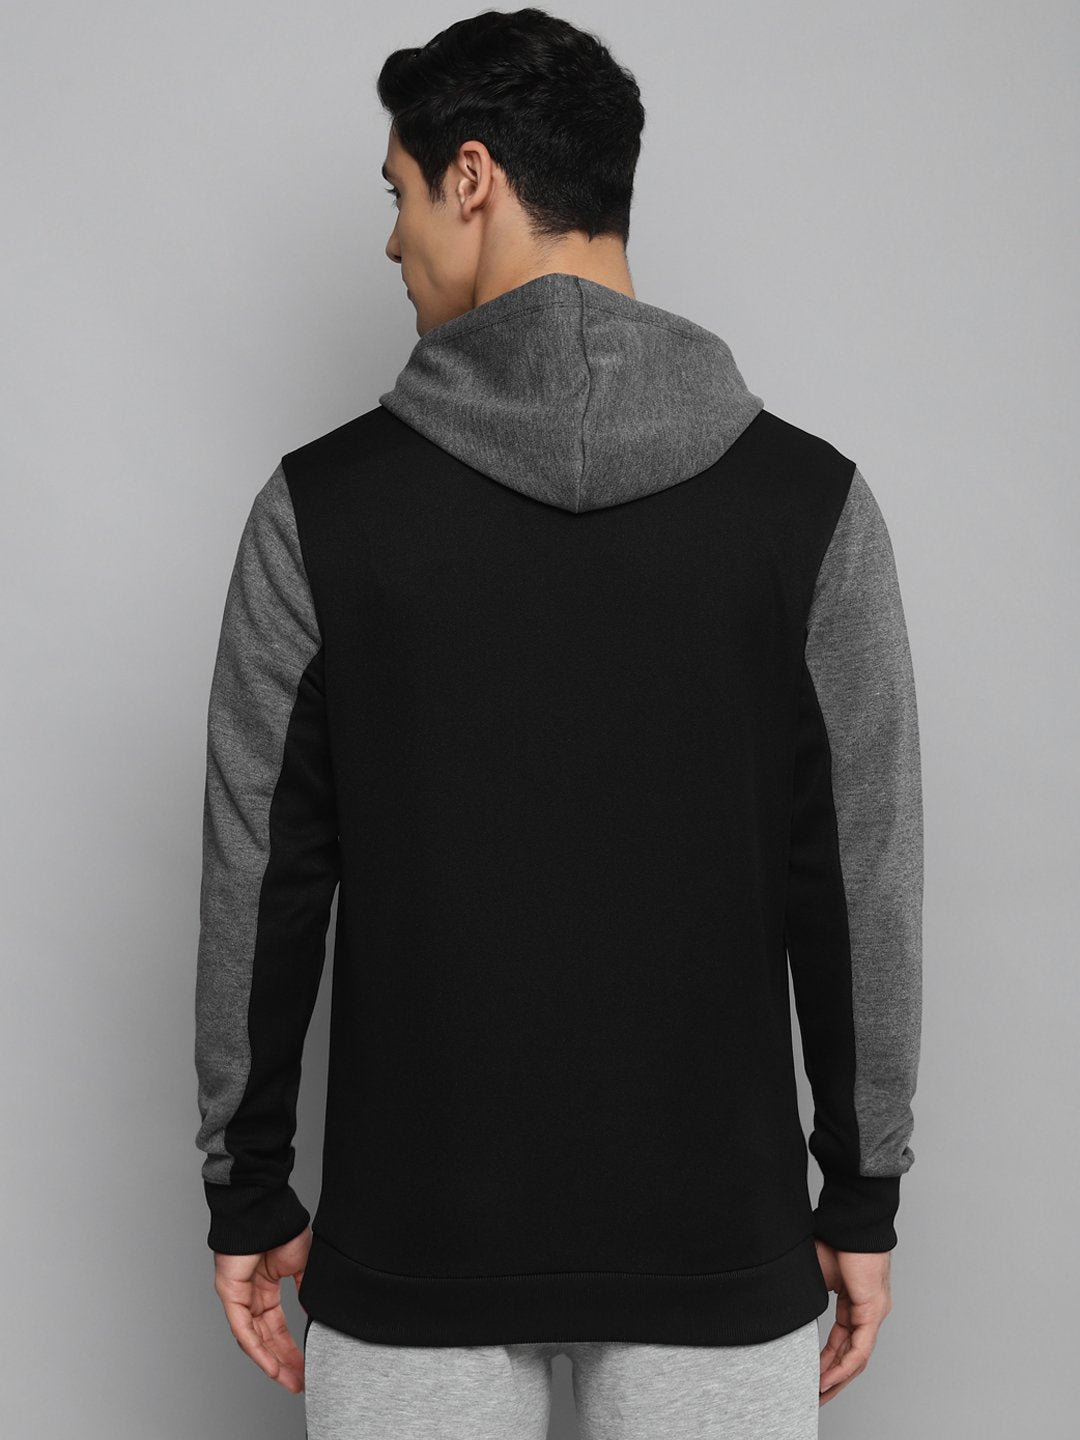 Alcis Men Black & Charcoal Grey Colourblocked Hooded Sweatshirt